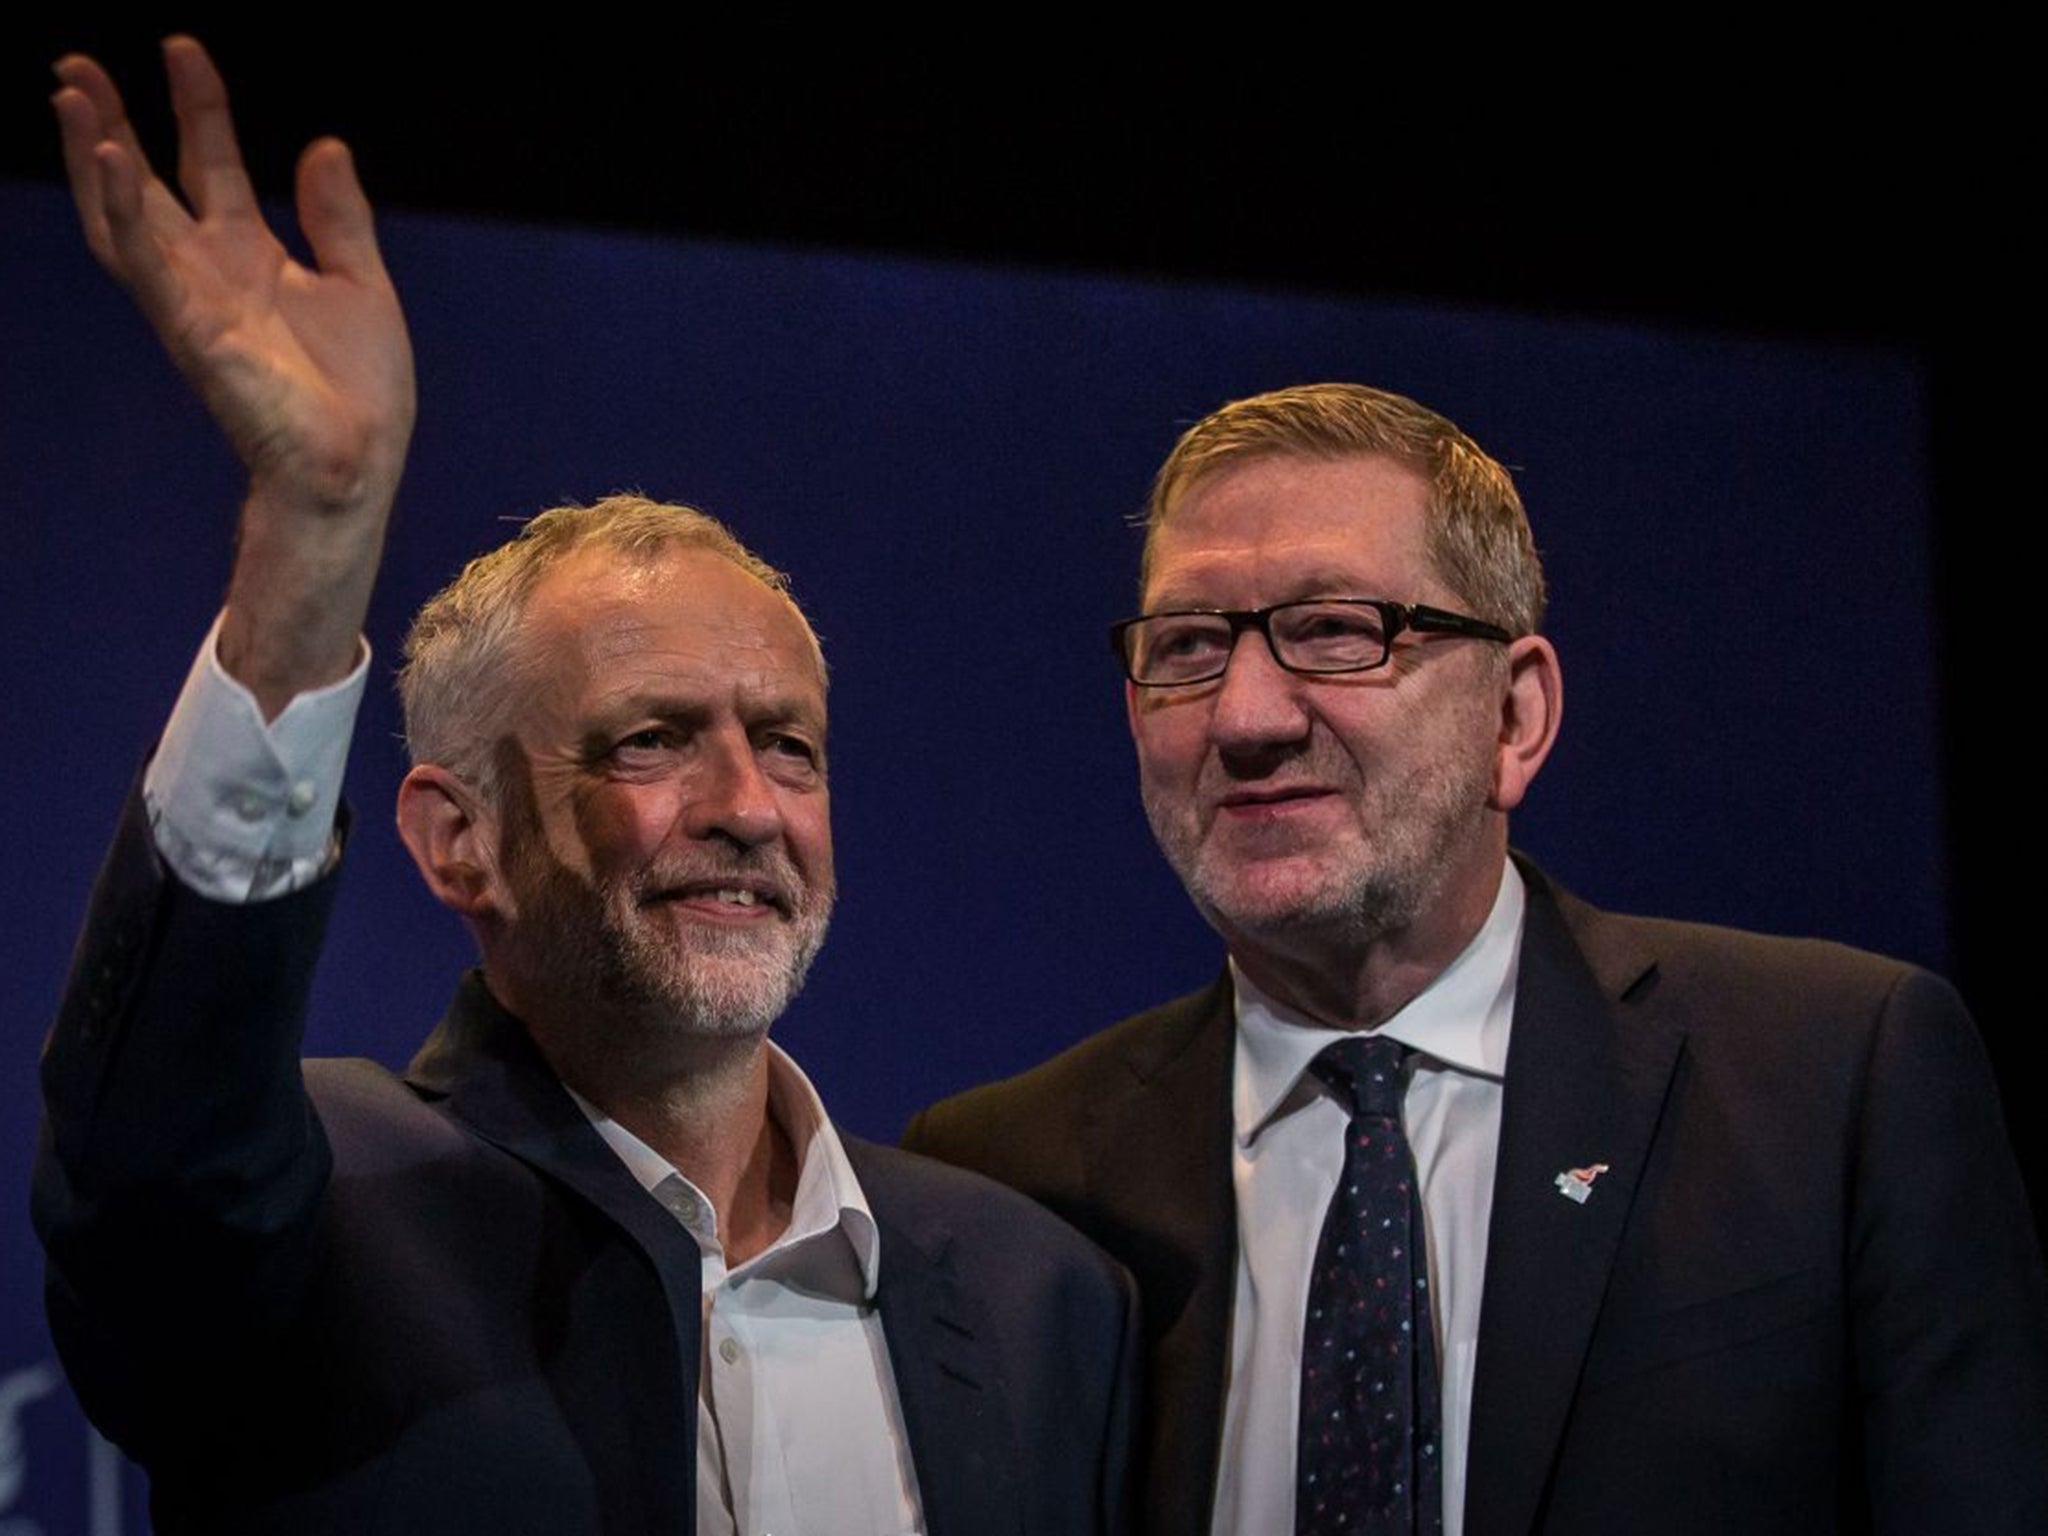 Jeremy Corbyn and Len McCluskey, the General Secretary of Unite